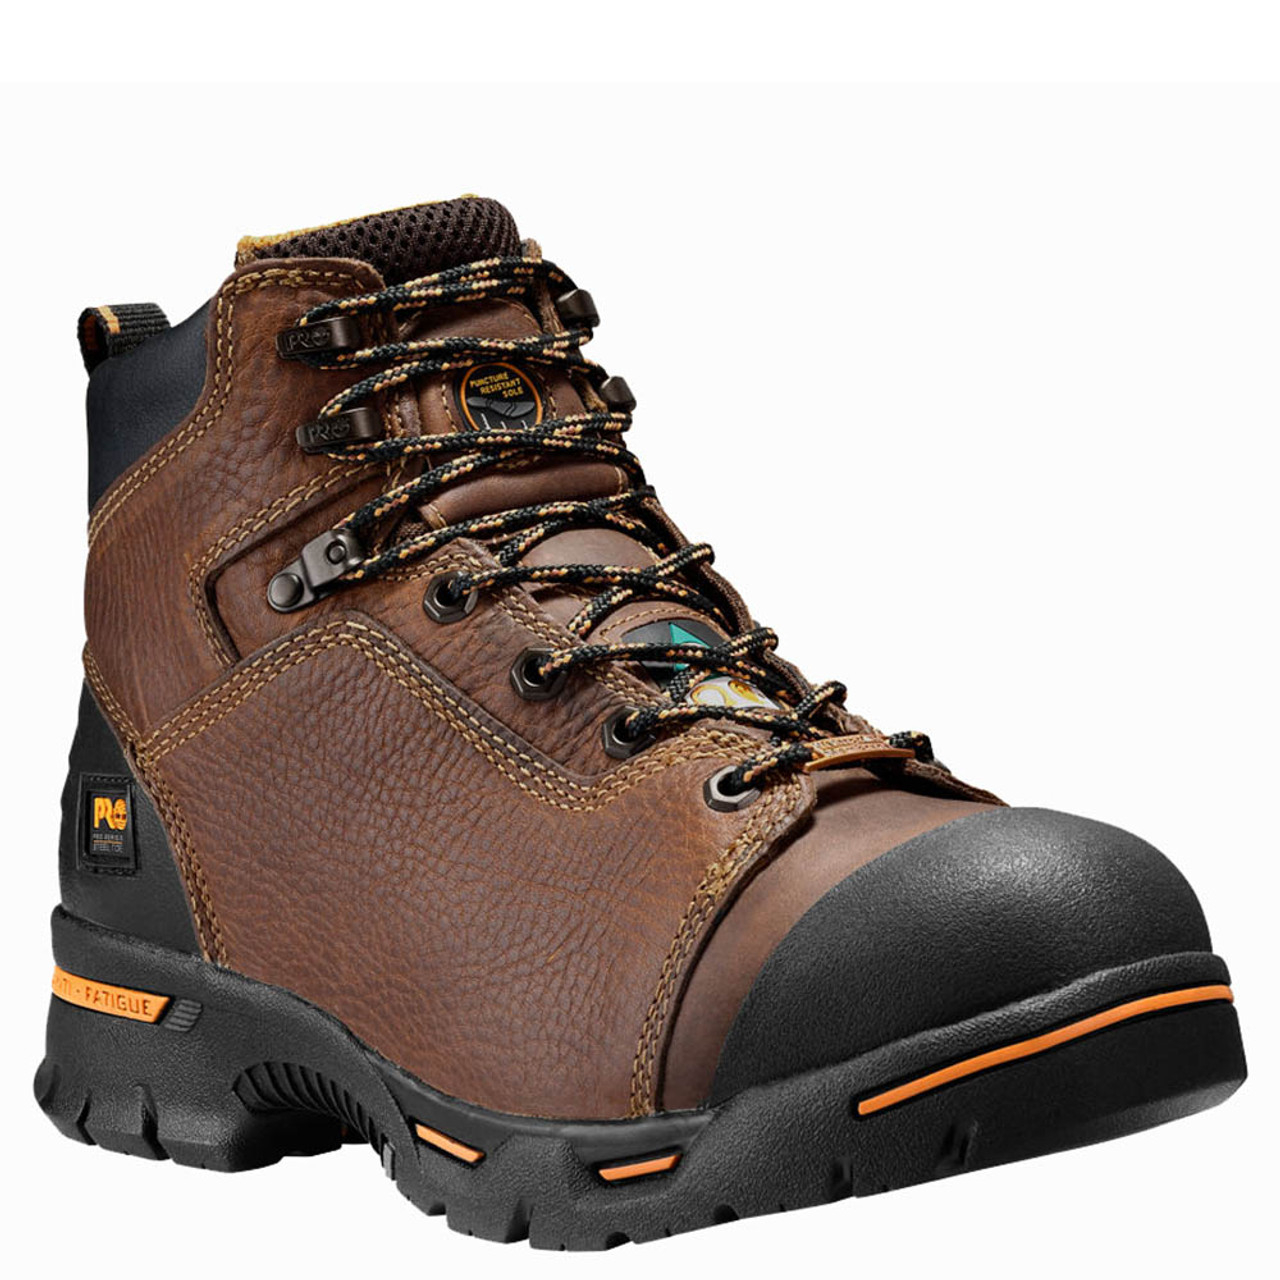 black timberland steel toe boots